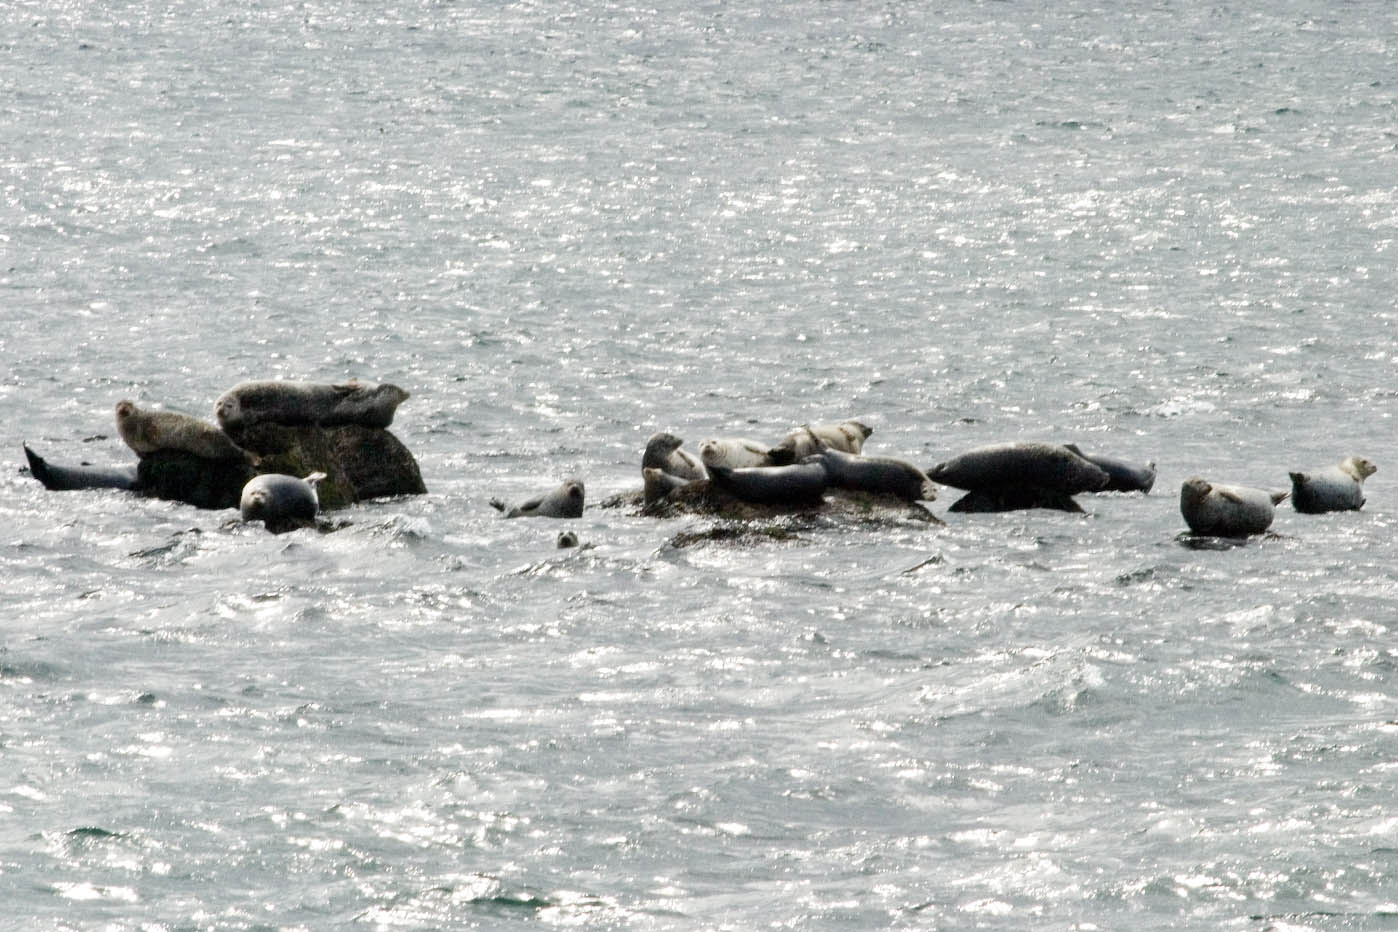 Harp seals around rocks in the sea